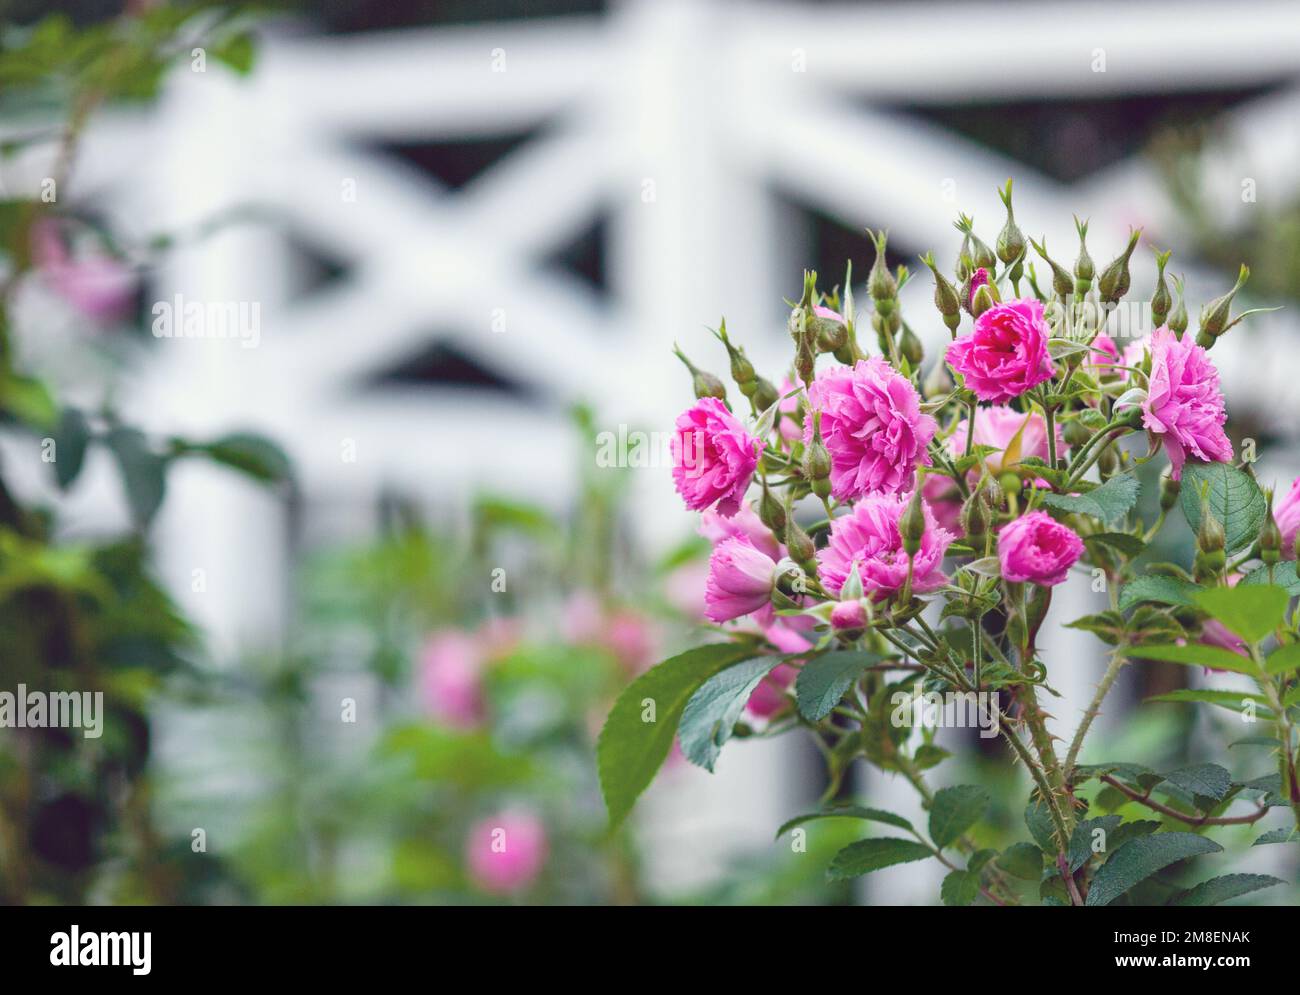 Pink Grootendorst hybrid rugosa rose blooming in summer garden Stock Photo